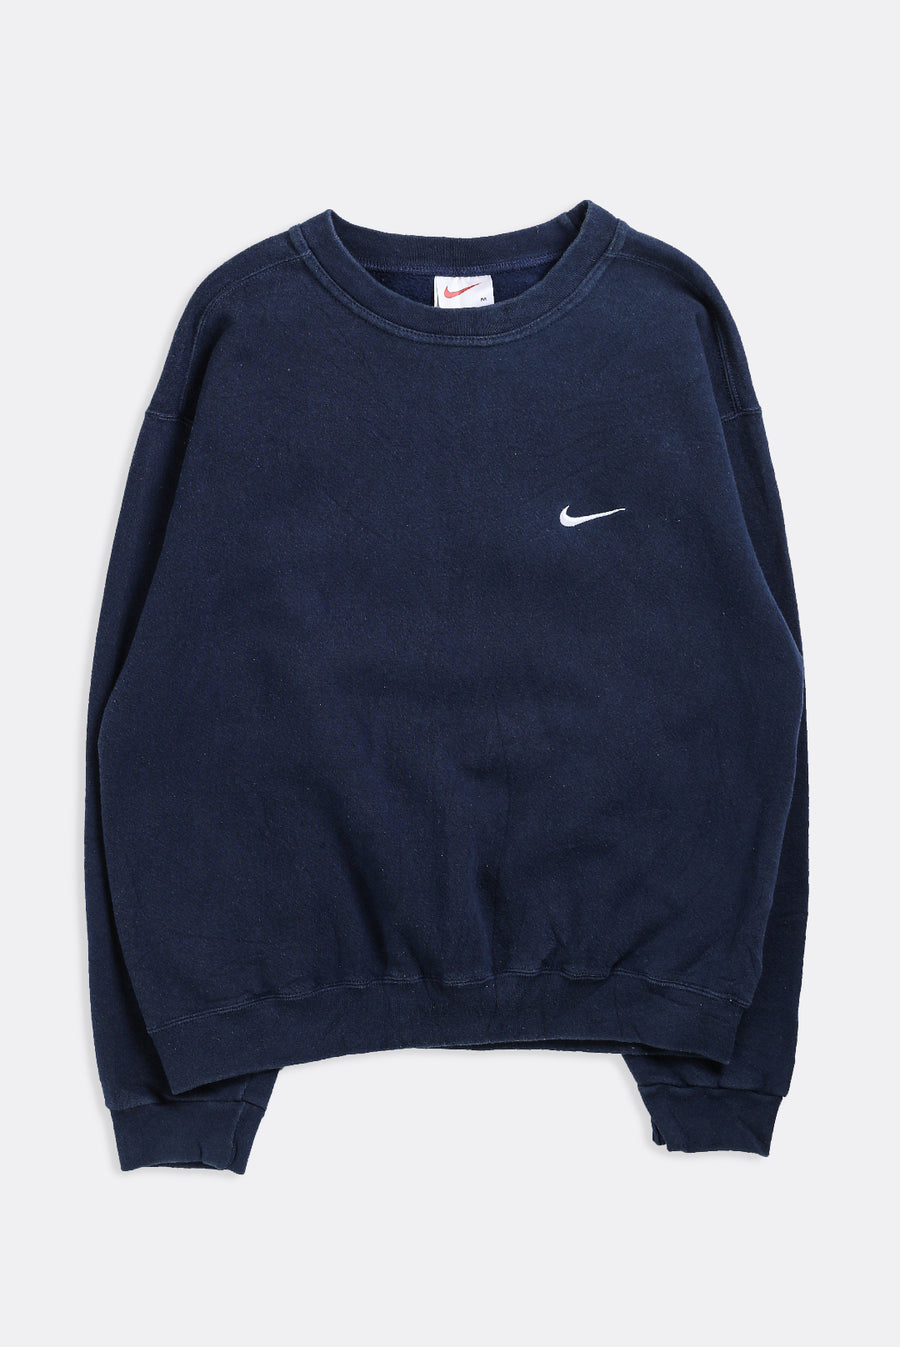 Vintage Nike Sweatshirt - XS, S, M, L, XL